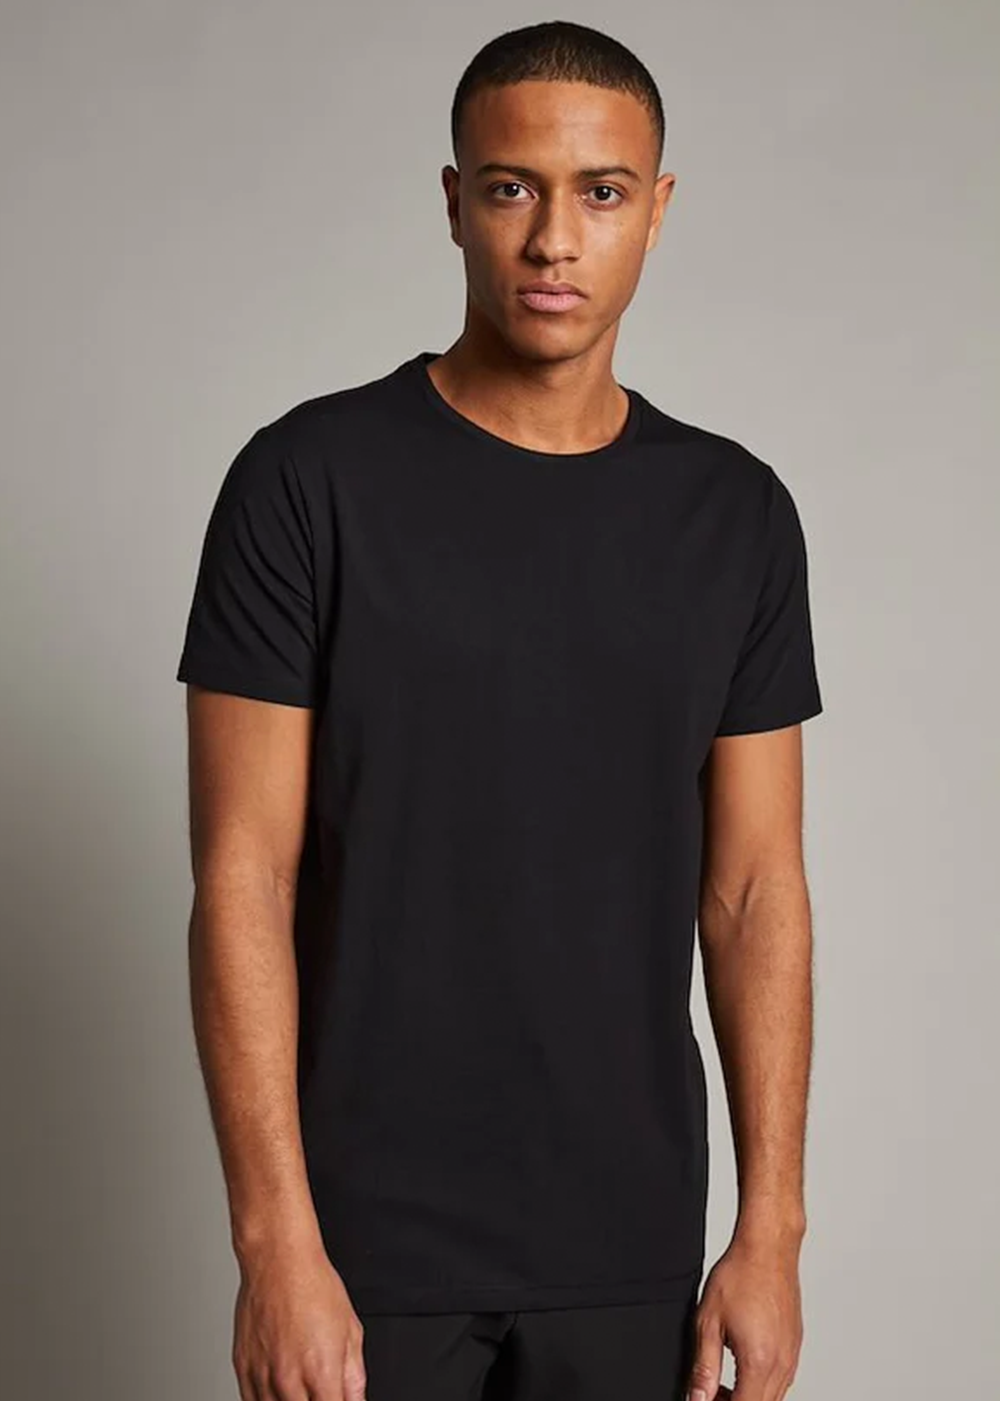 Jermalink Cotton Stretch T-Shirt - Black - Matinique Canada - Danali